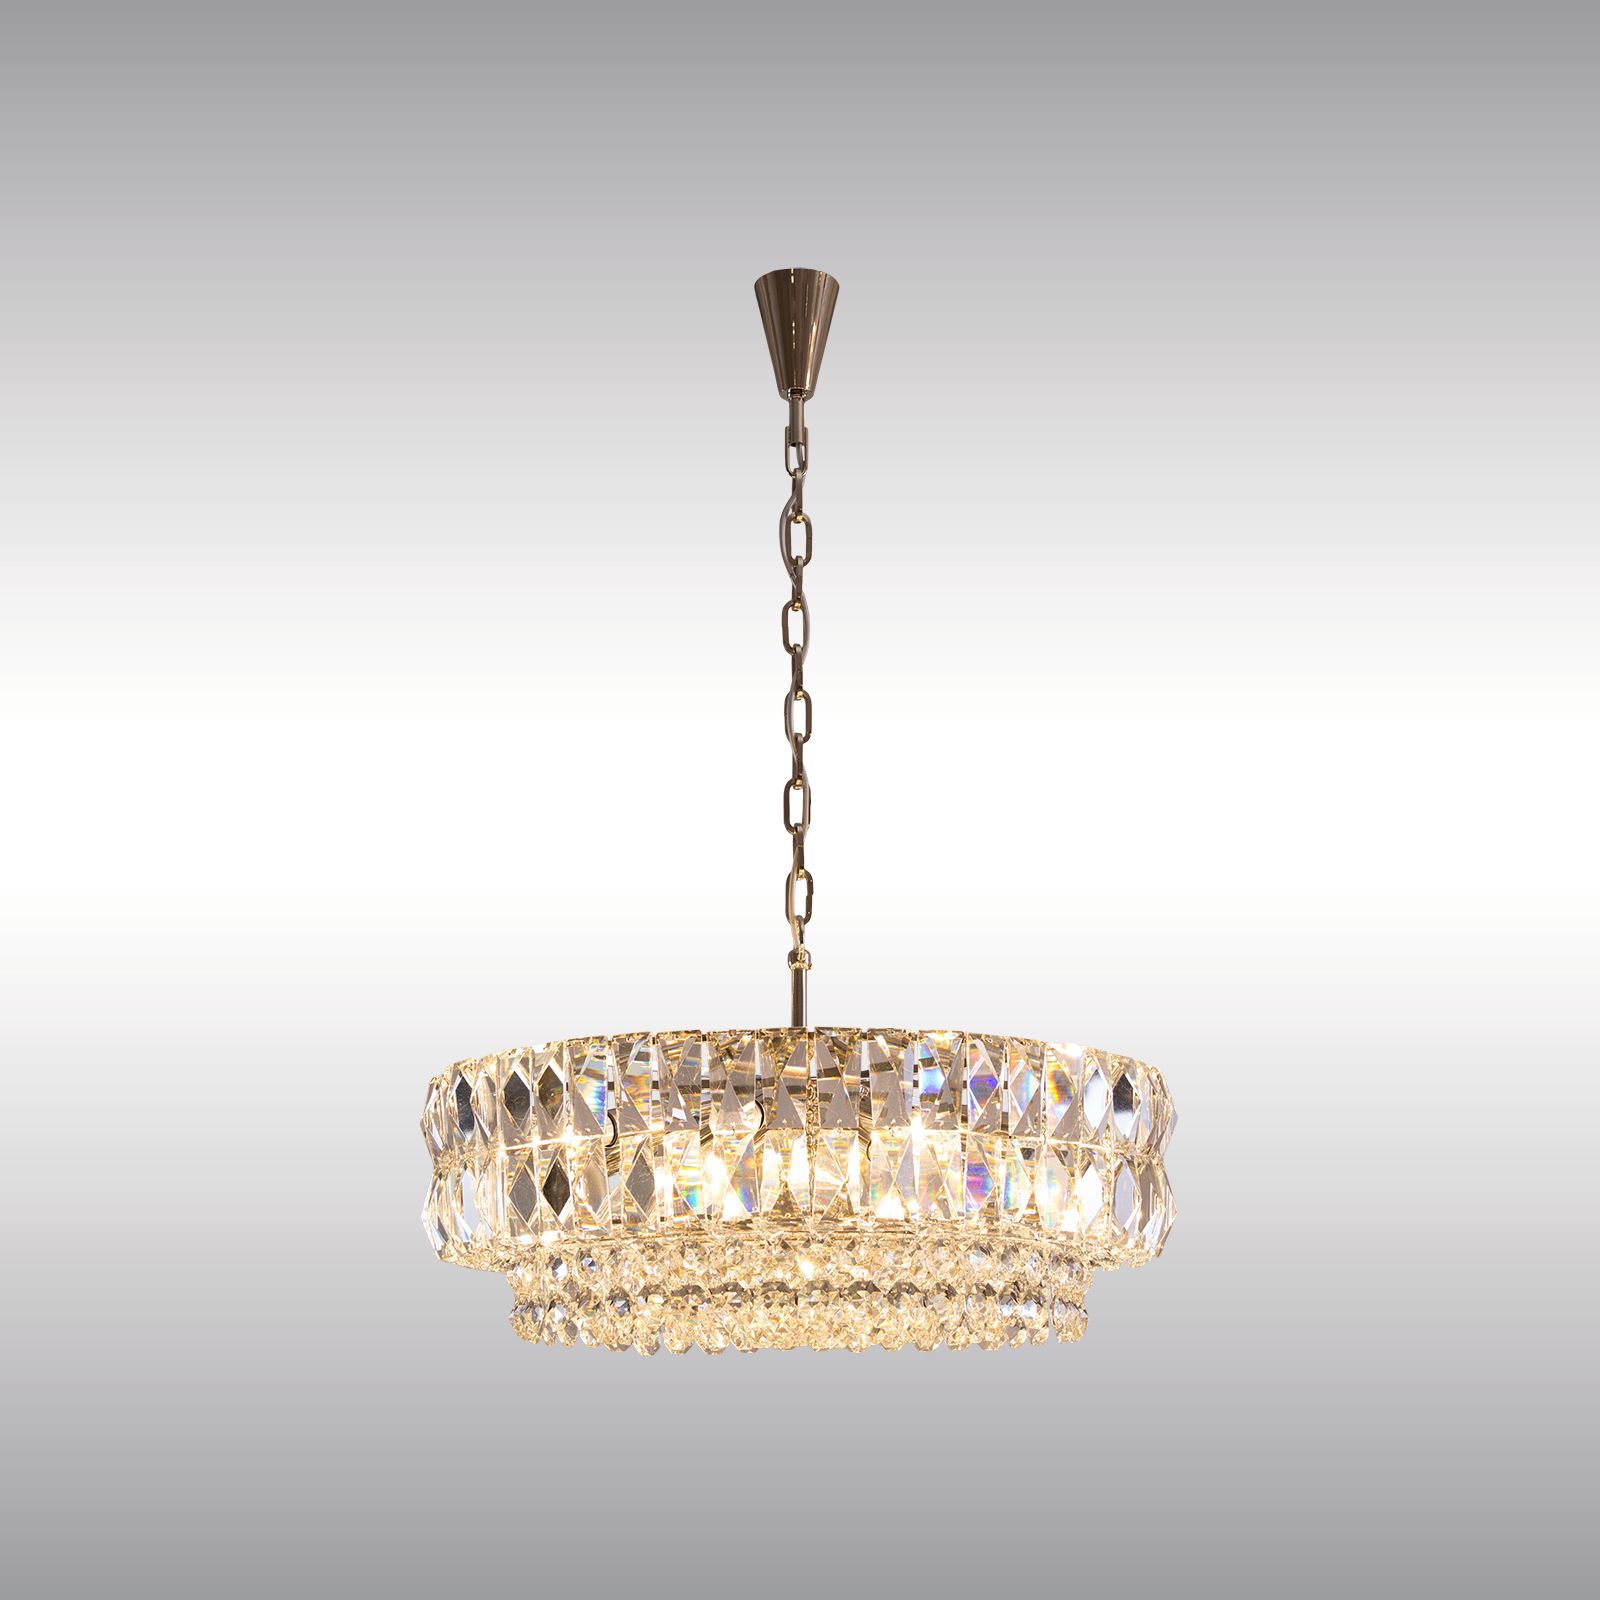 WOKA LAMPS VIENNA - OrderNr.: 80030|Brillian Crystal Chandelier - Design: Bakalowits